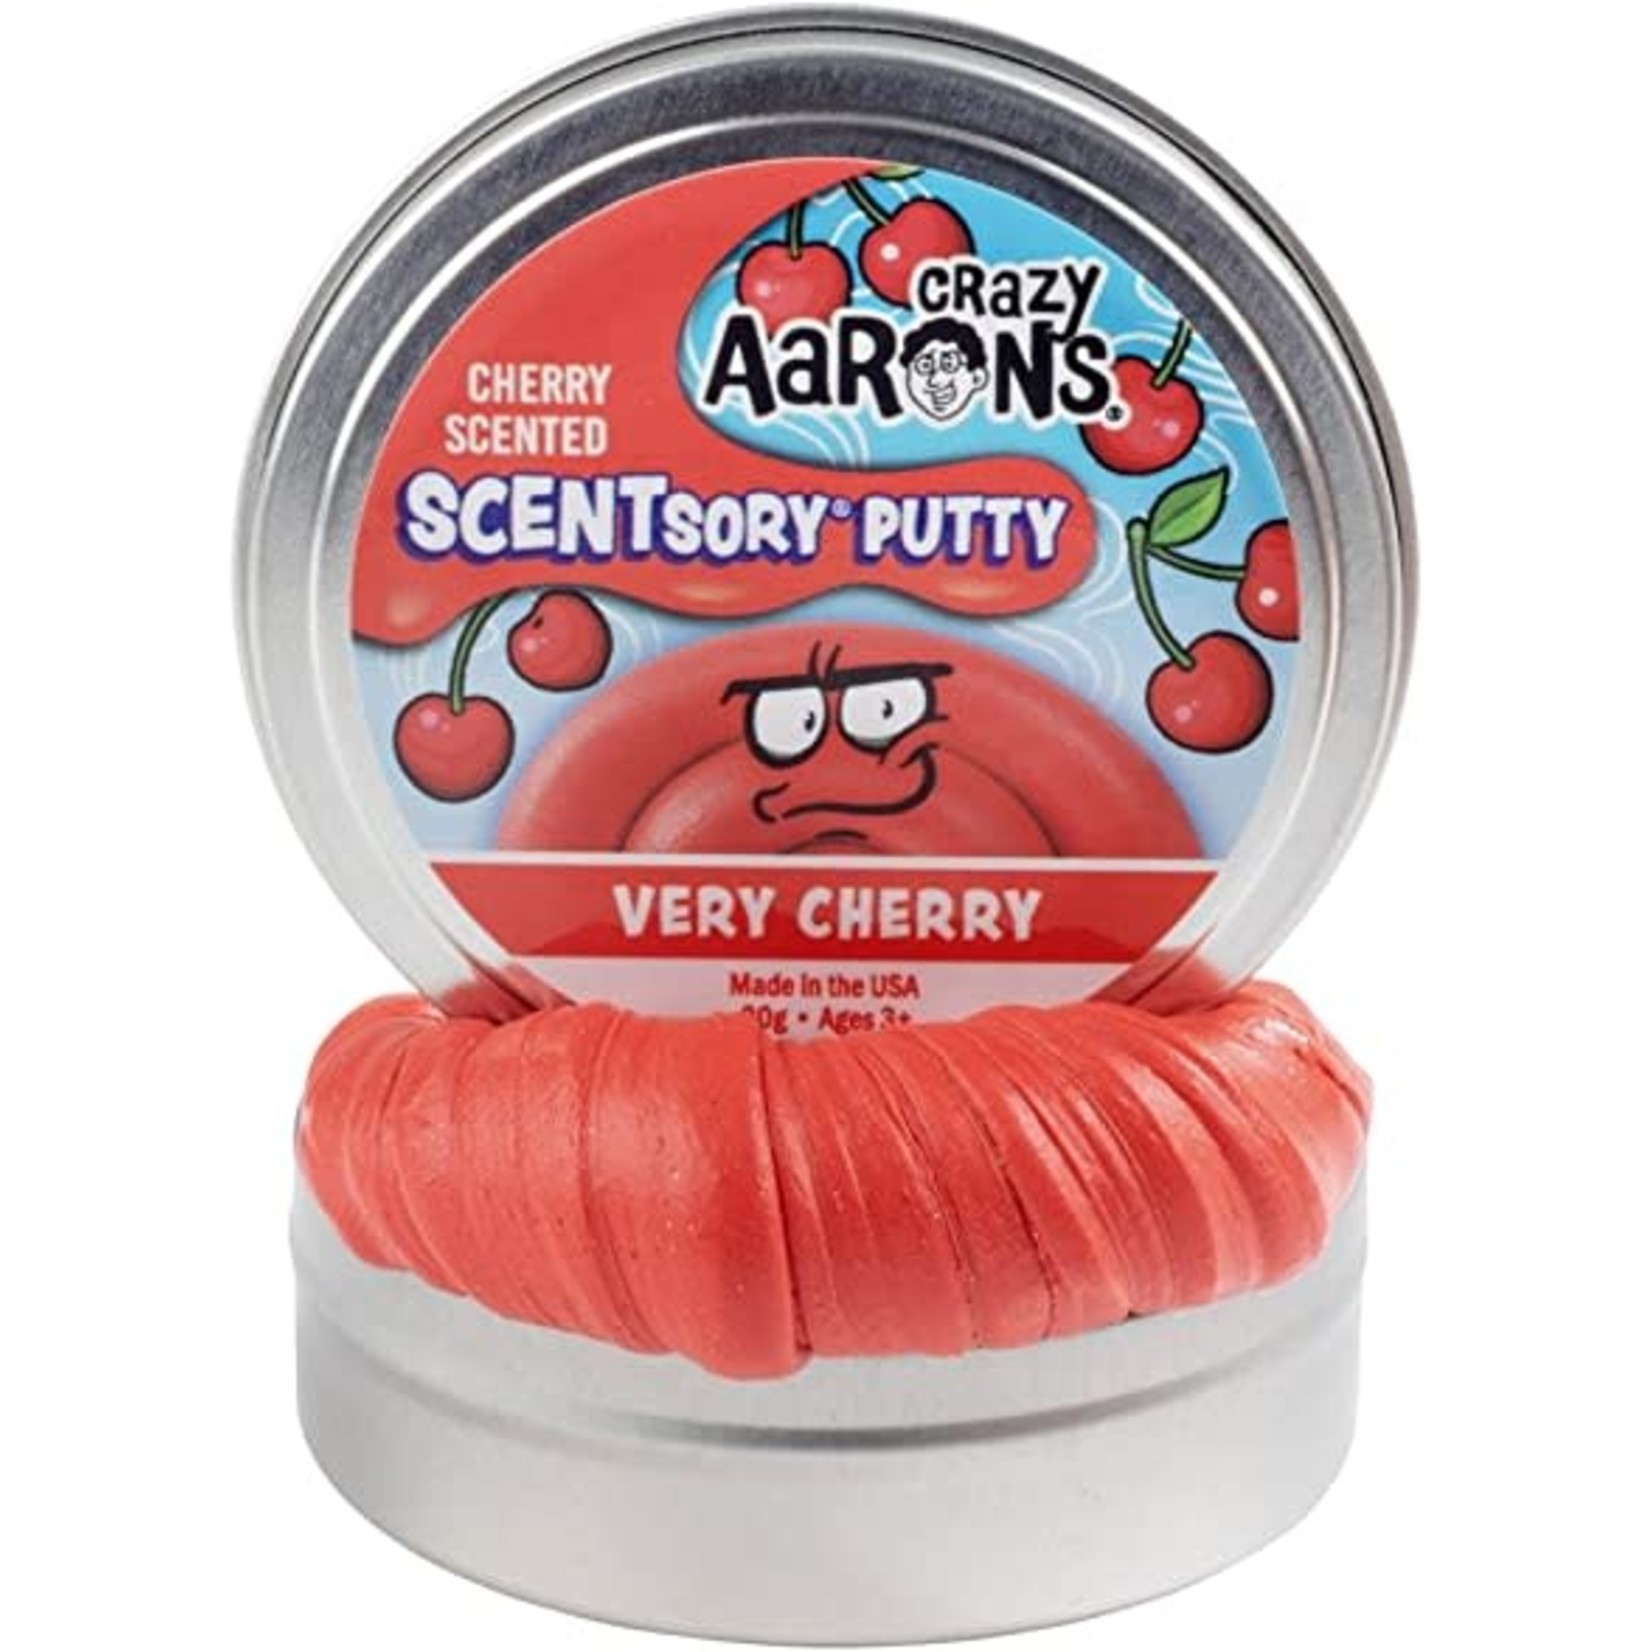 Crazy Aaron’s Scentsory Putty - Very Cherry